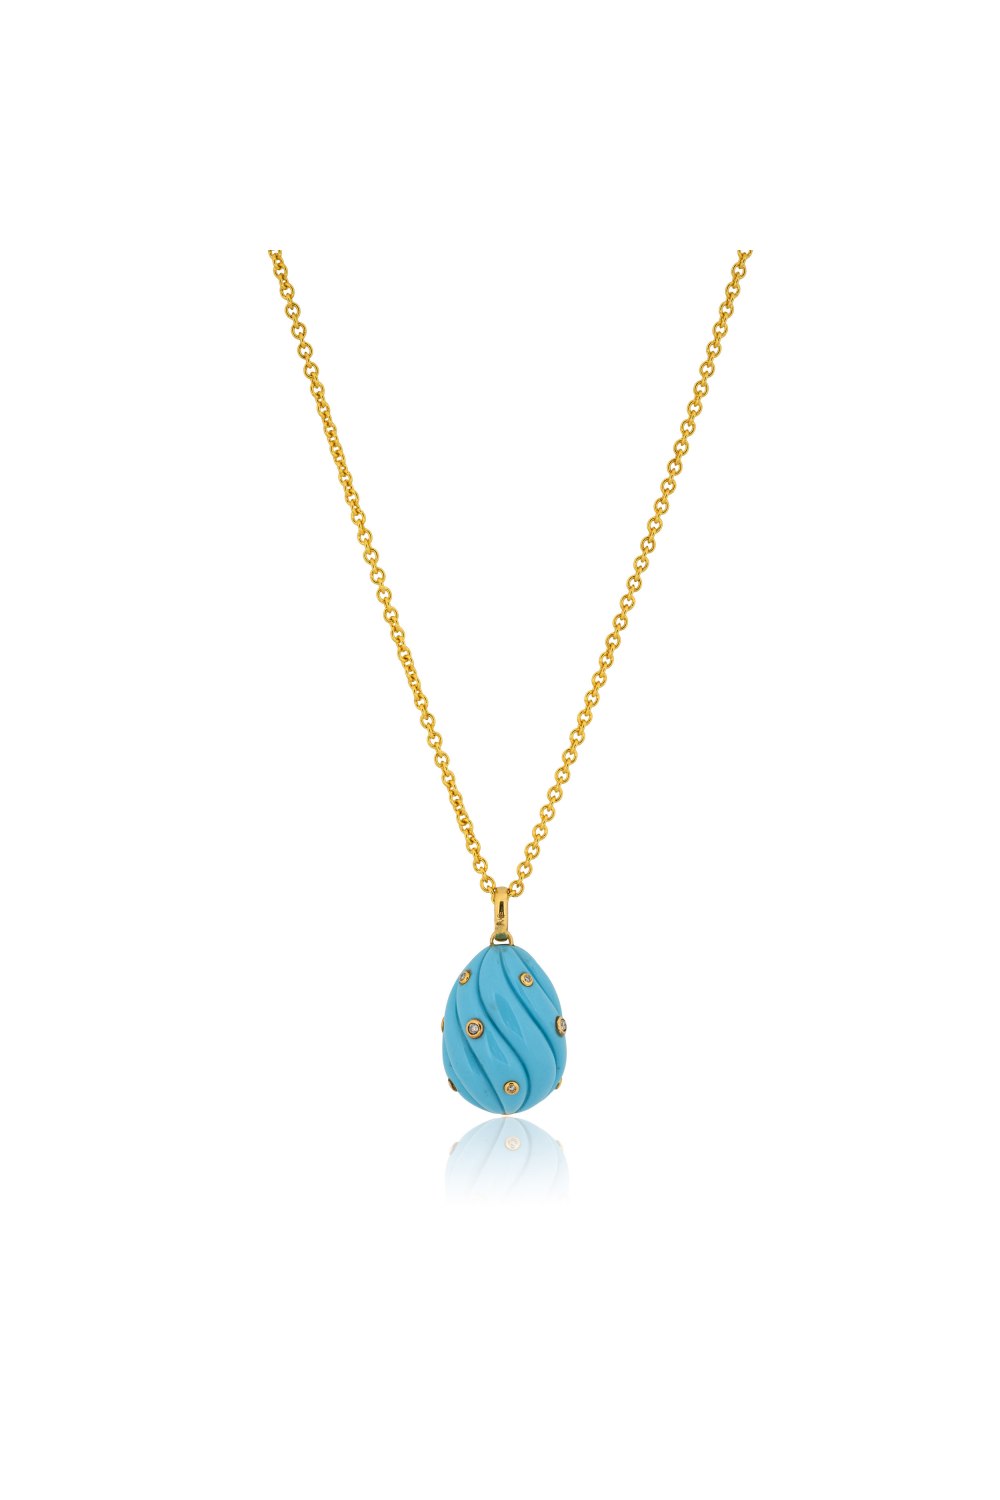 Sparkling Diamond Polka-Dot Turquoise Egg Pendant Necklace